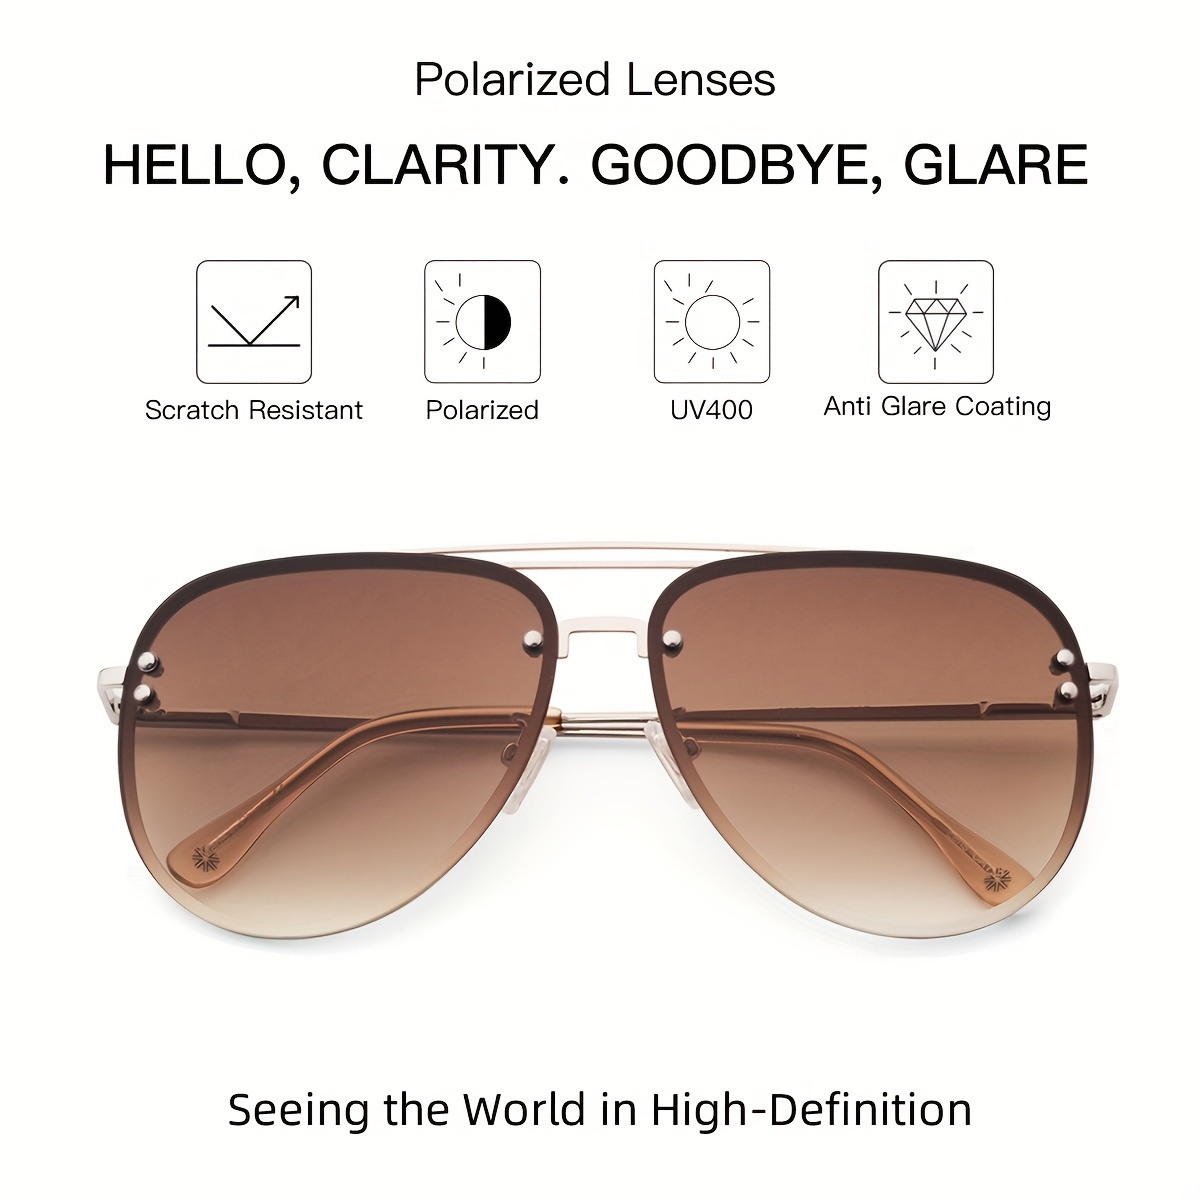 Golden Horizon Sunnies Oversized Square Sunglasses For Women